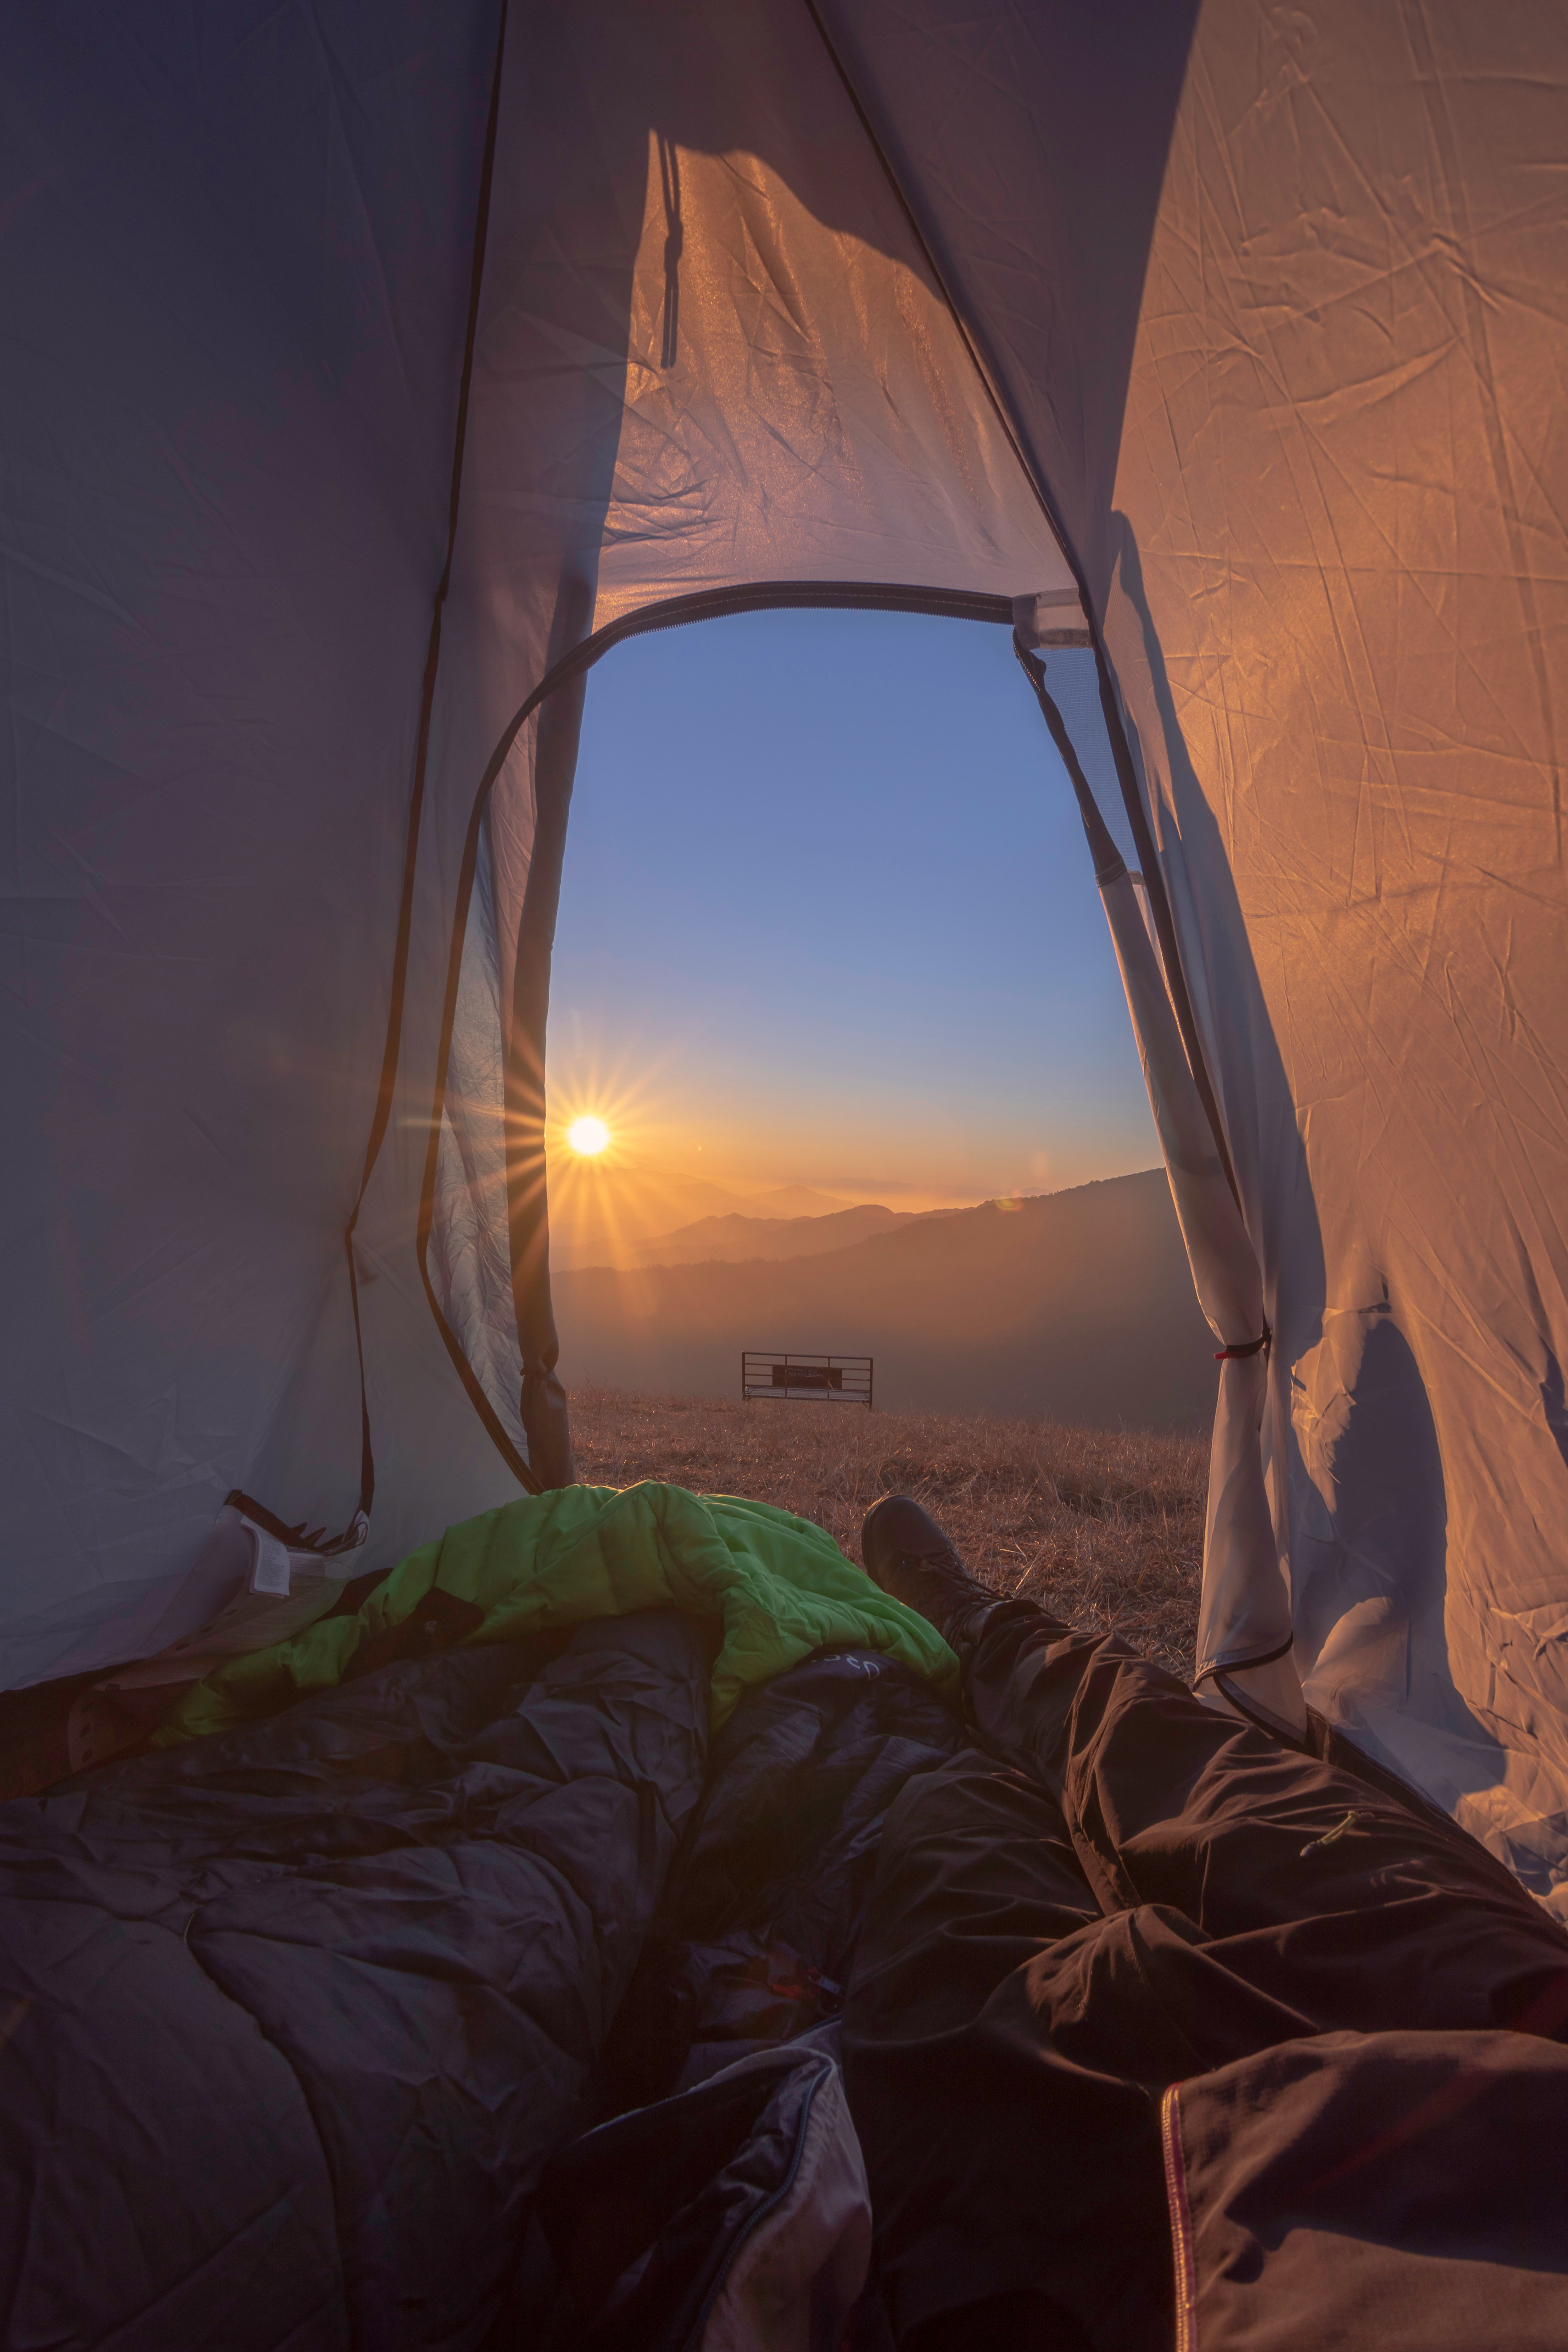 camping, nature, legs, journey, sunlight, tent, campsite, tourism